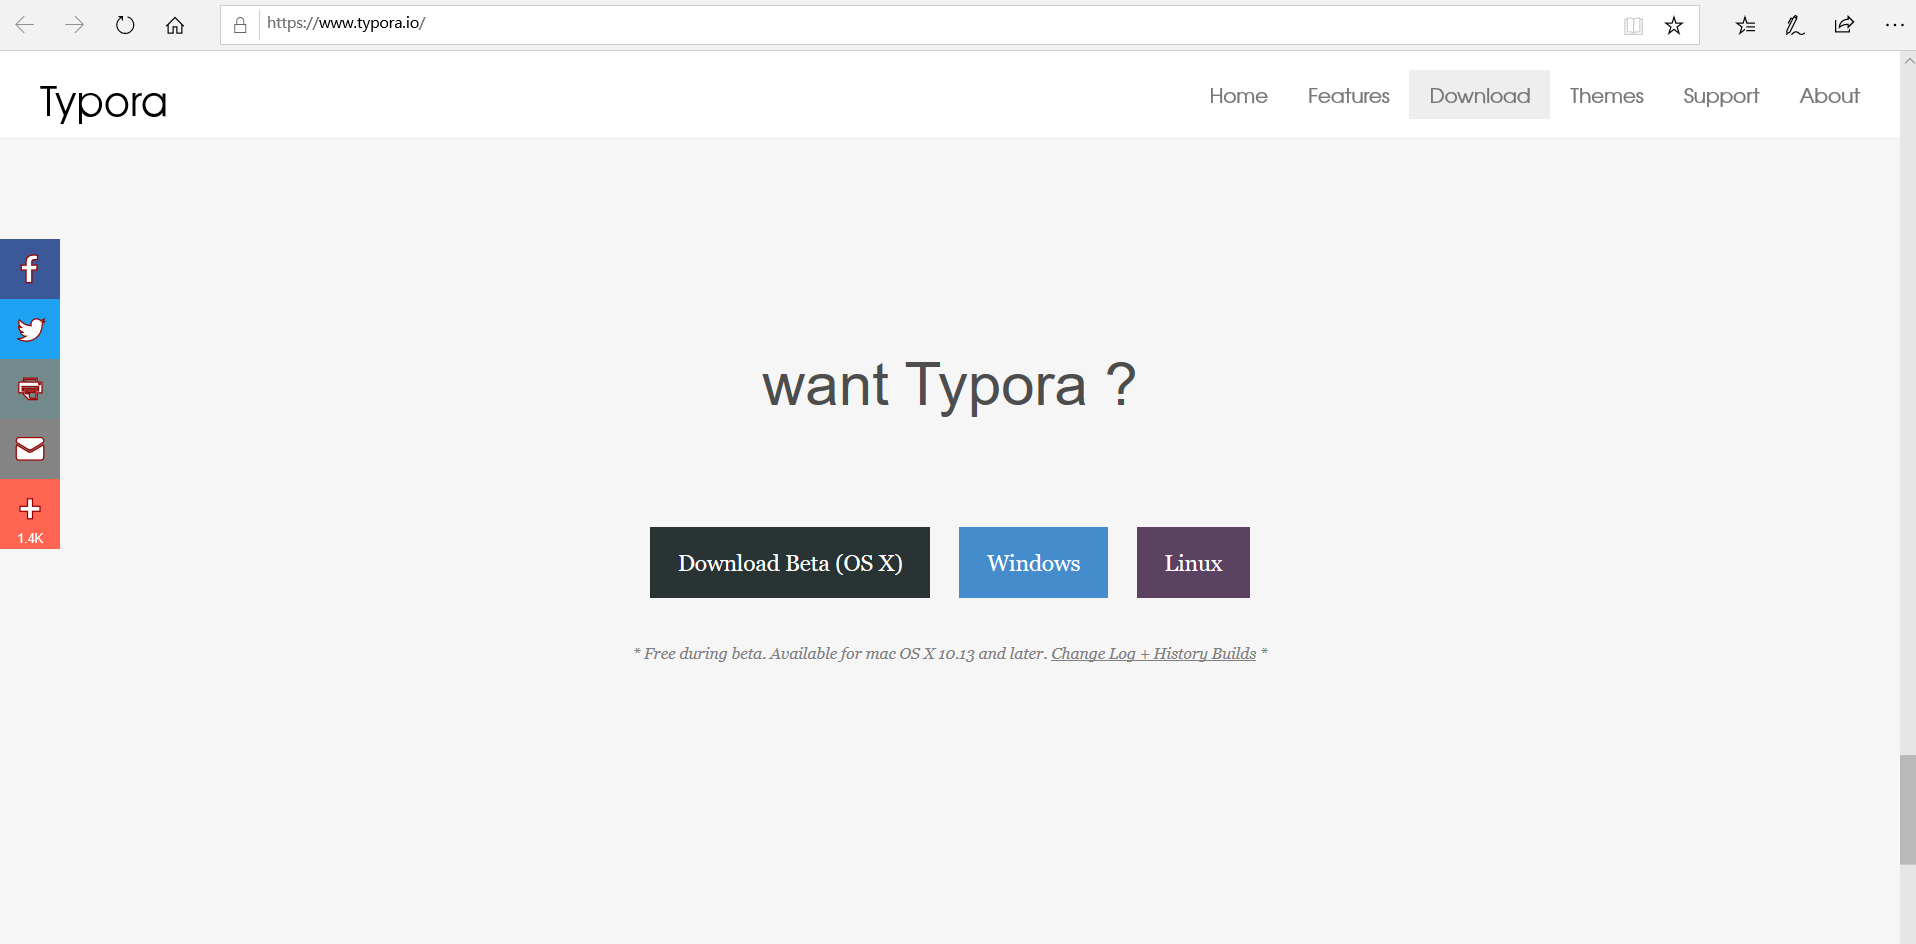 download typora 1.5.8 crack